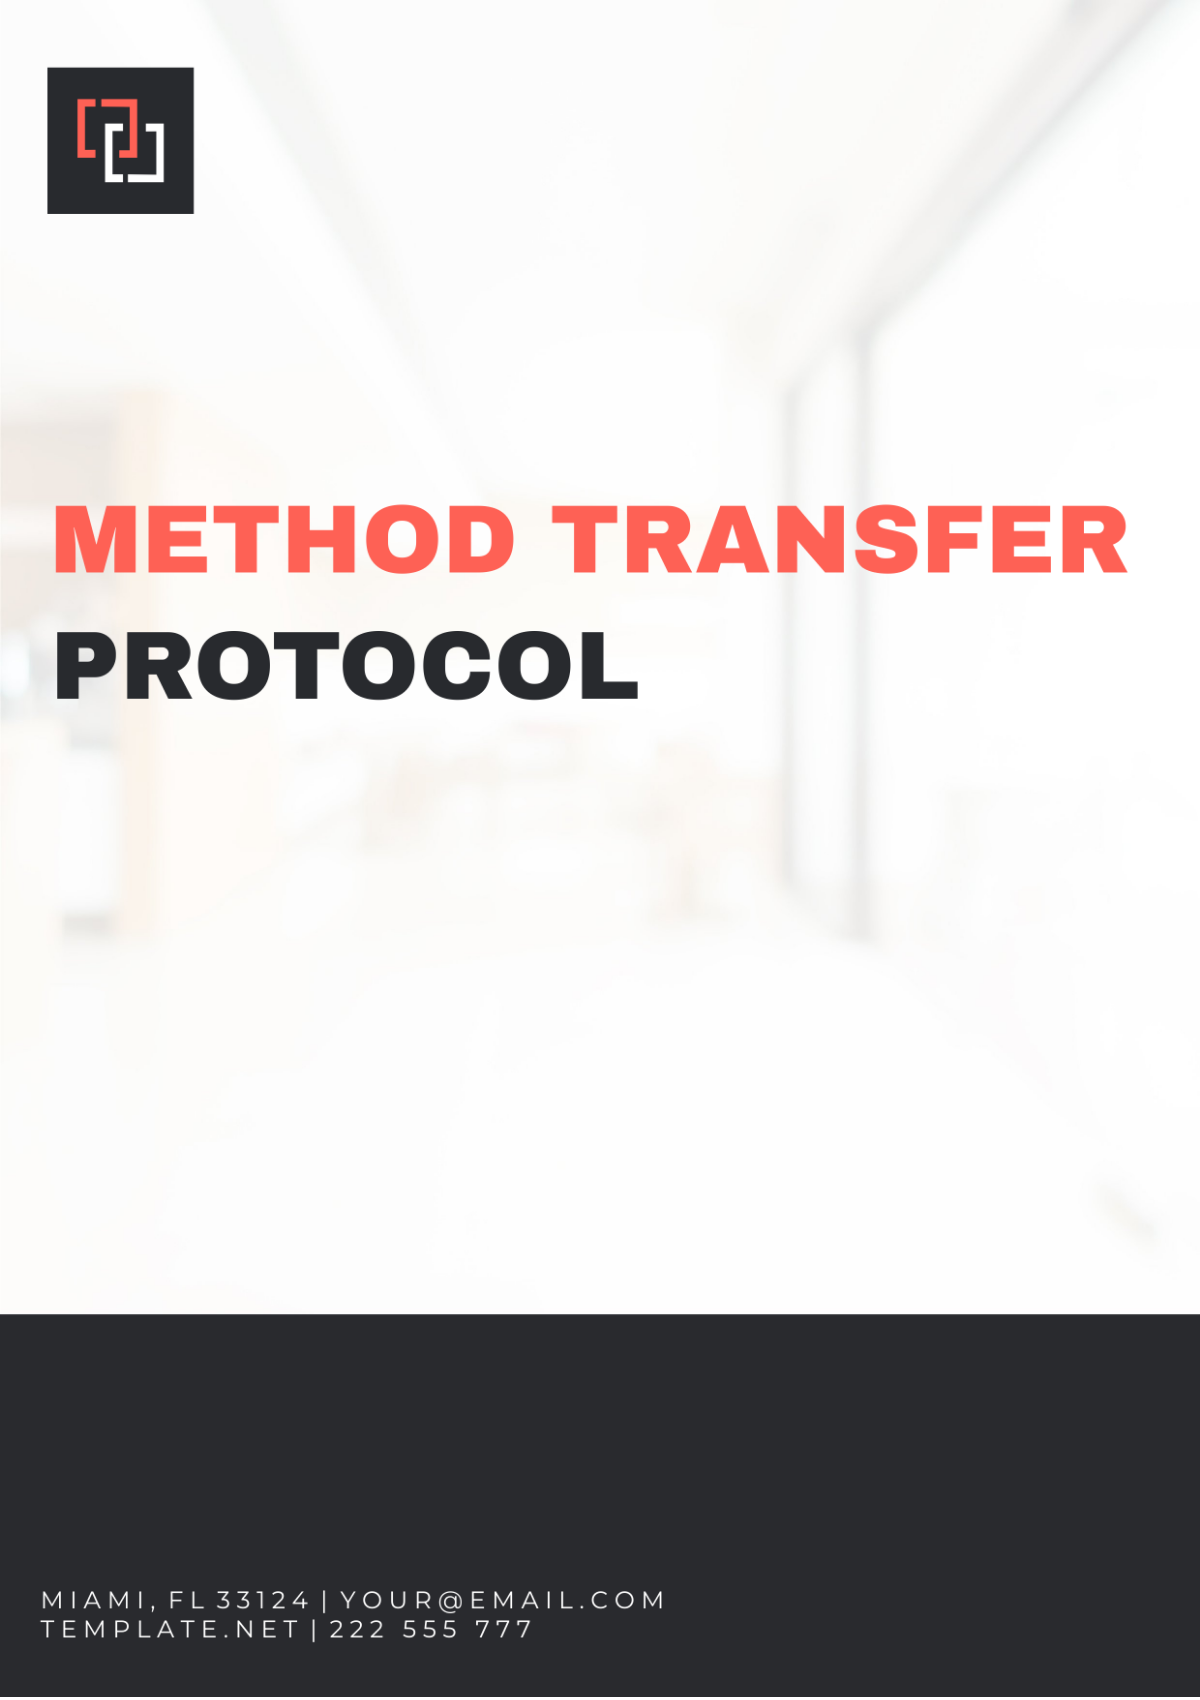 Method Transfer Protocol Template